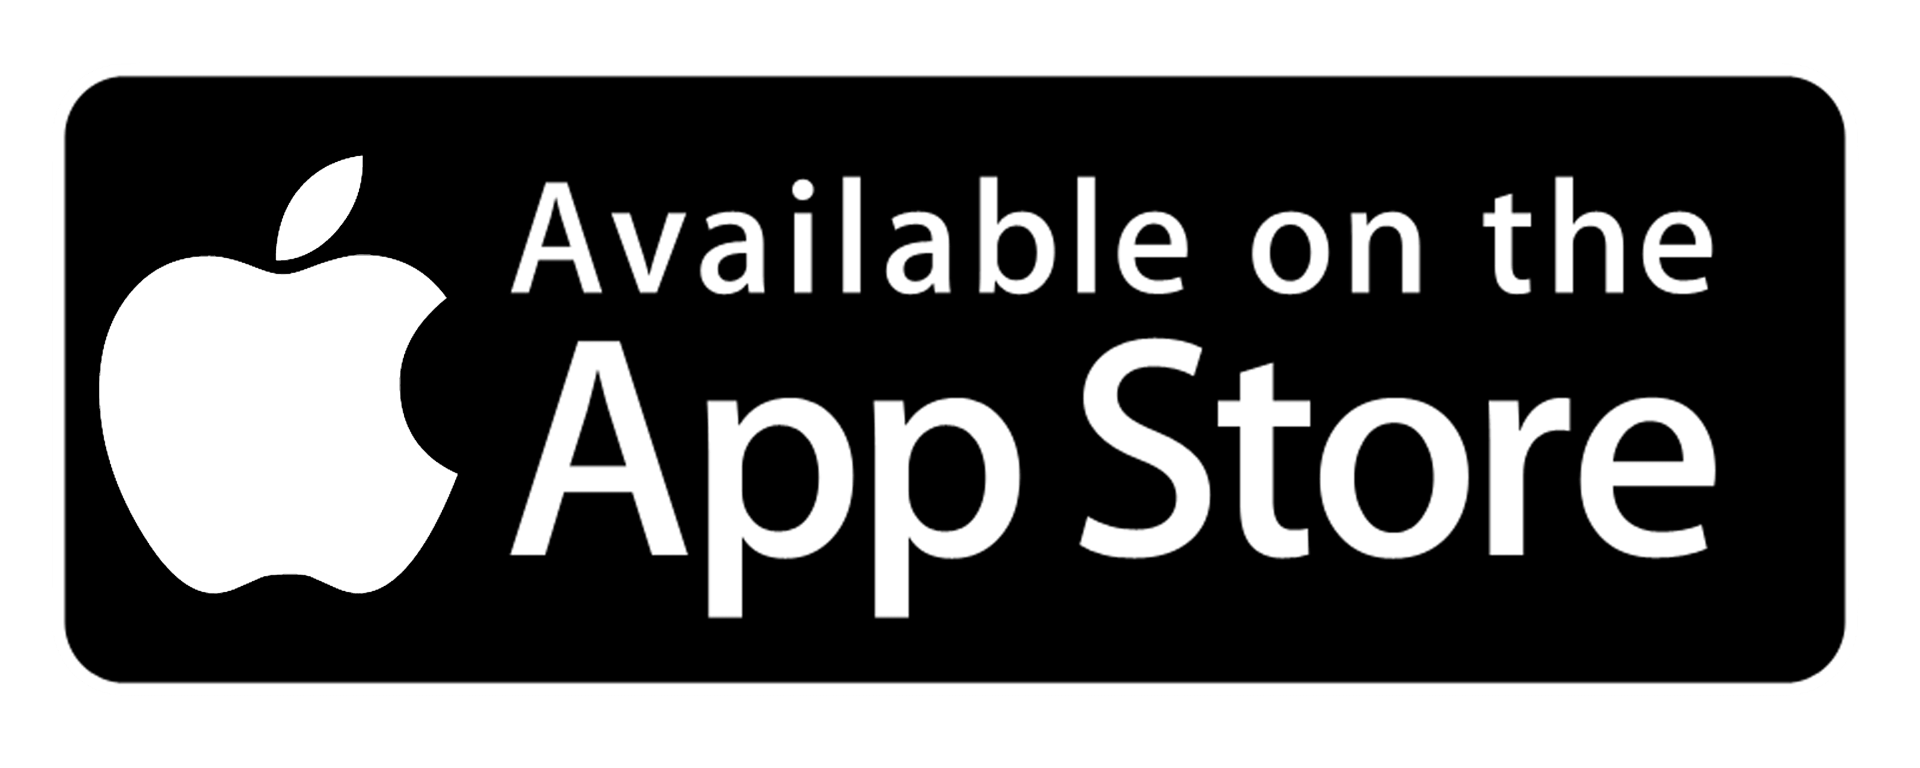 Recalibrate Australia - Apple App store logo image